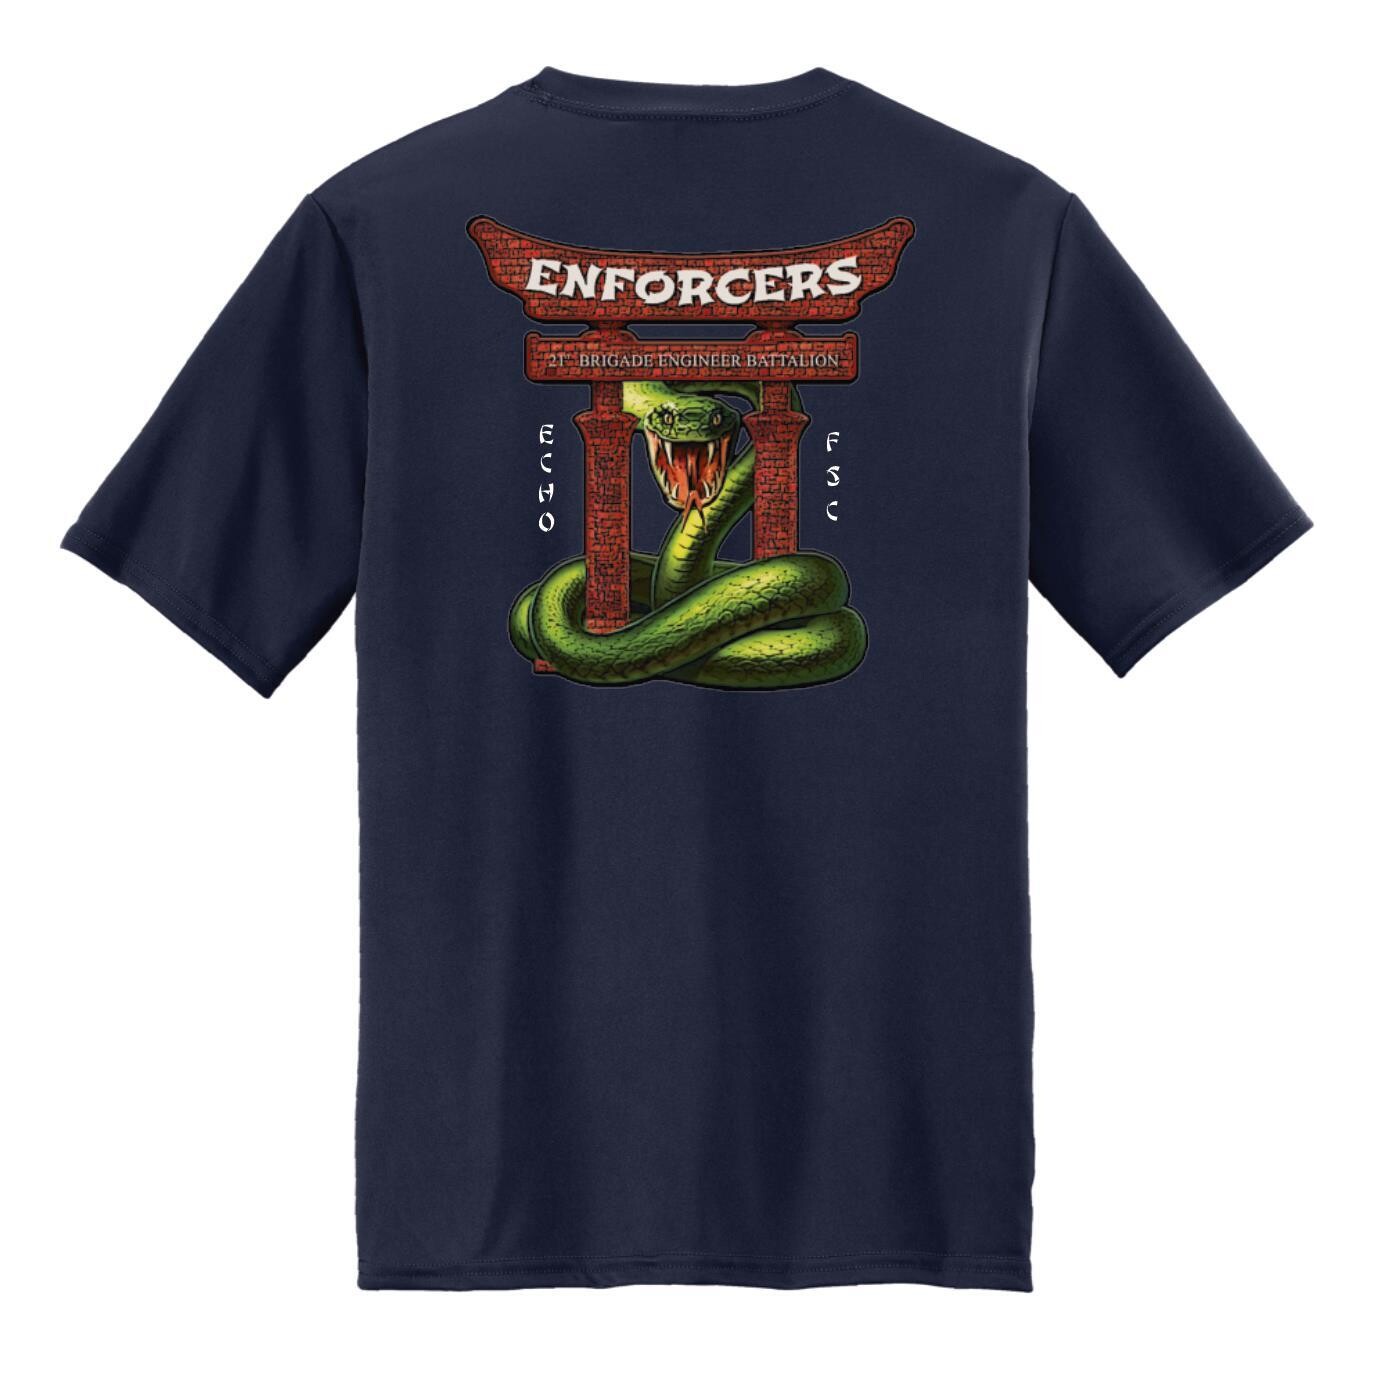 Echo FSC "Enforcers" 21 BEB Shirt